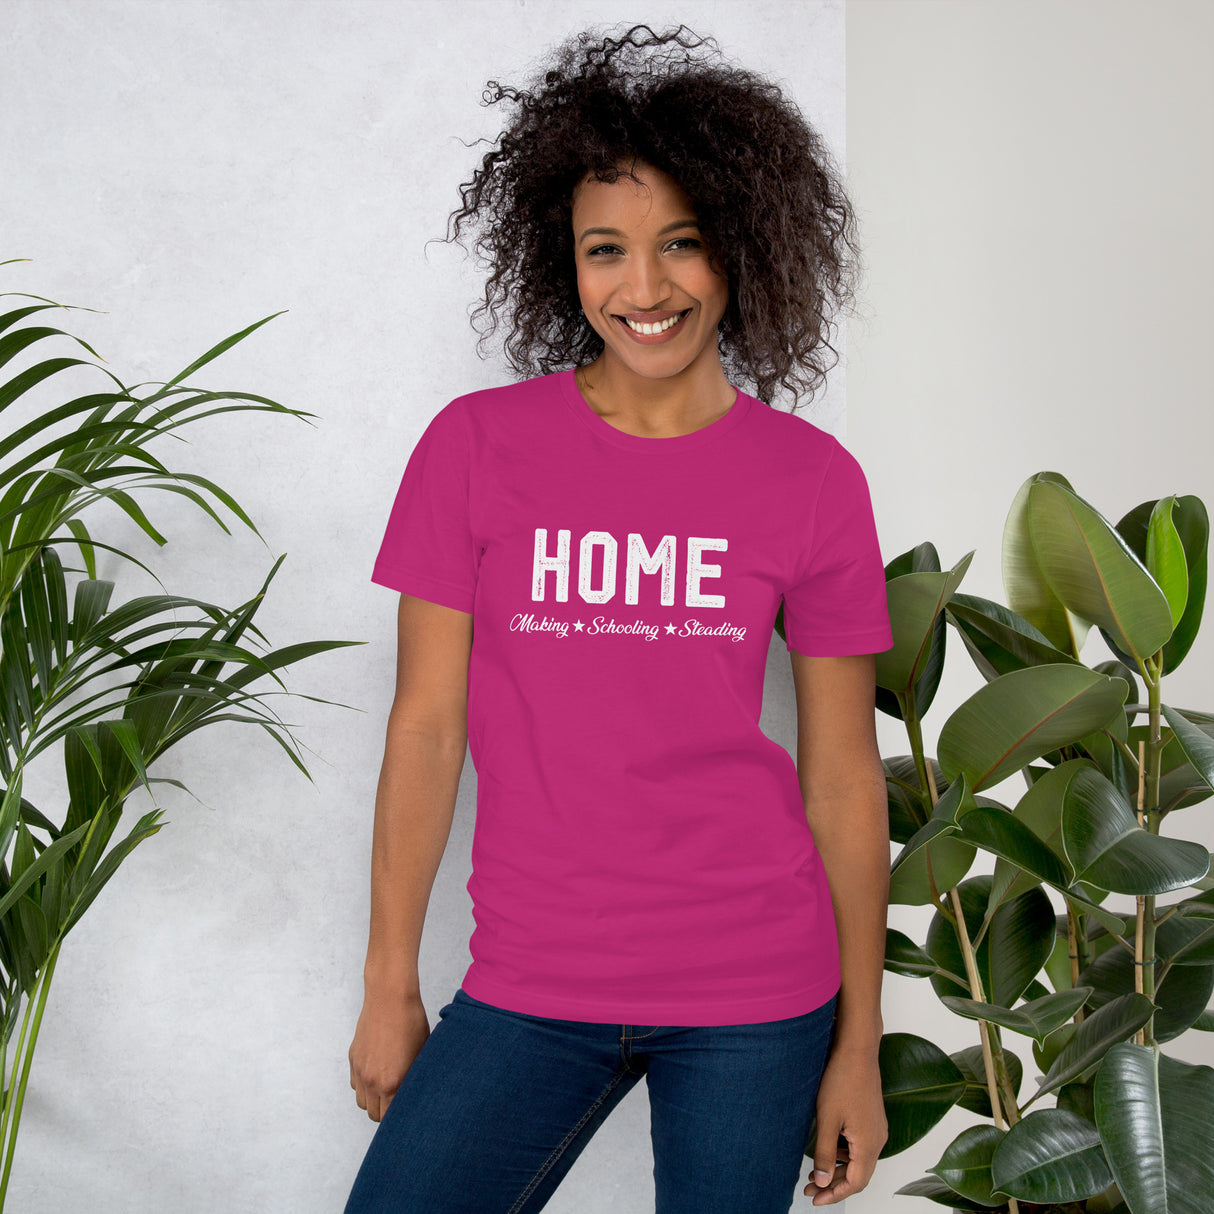 Home Making School Steading Women's Shirt